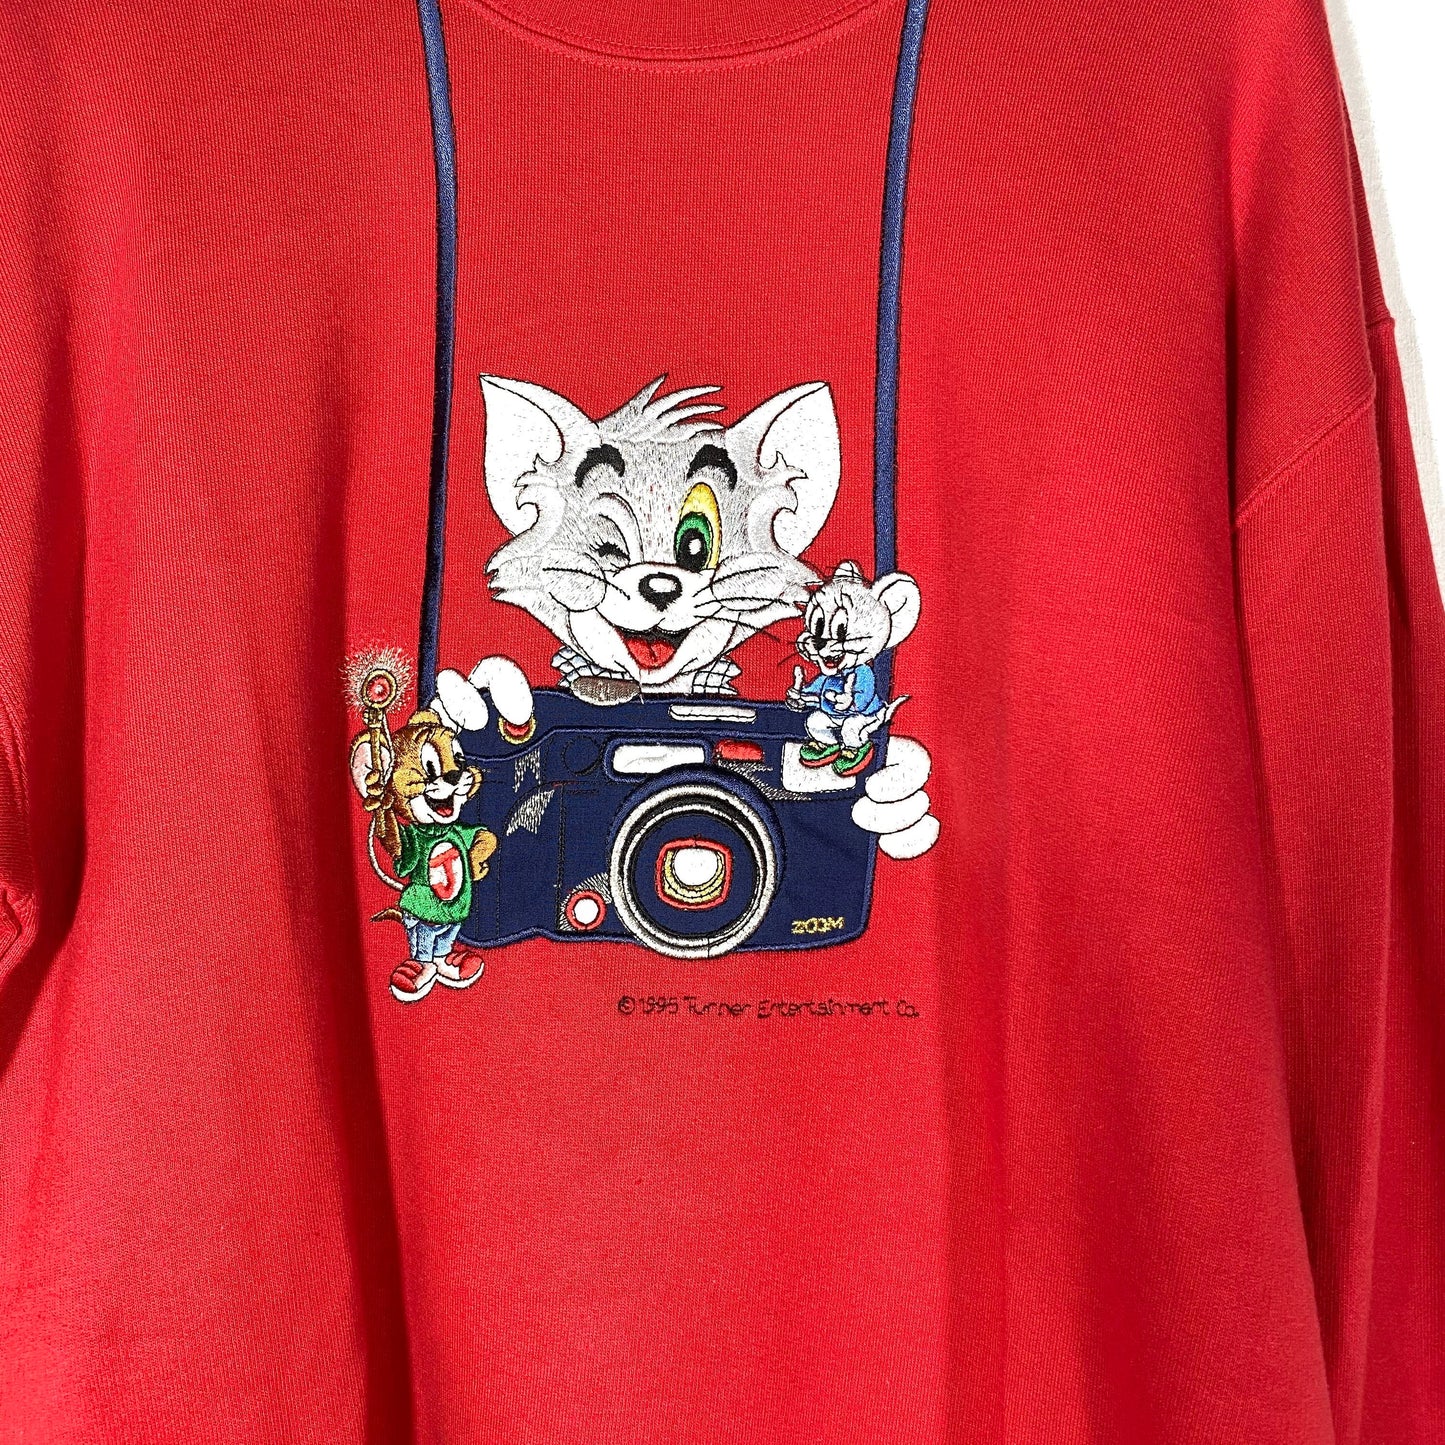 Segreta by Schvili Tom & Jerry camera embroidered sweatshirt, mint condition sz S oversized fit